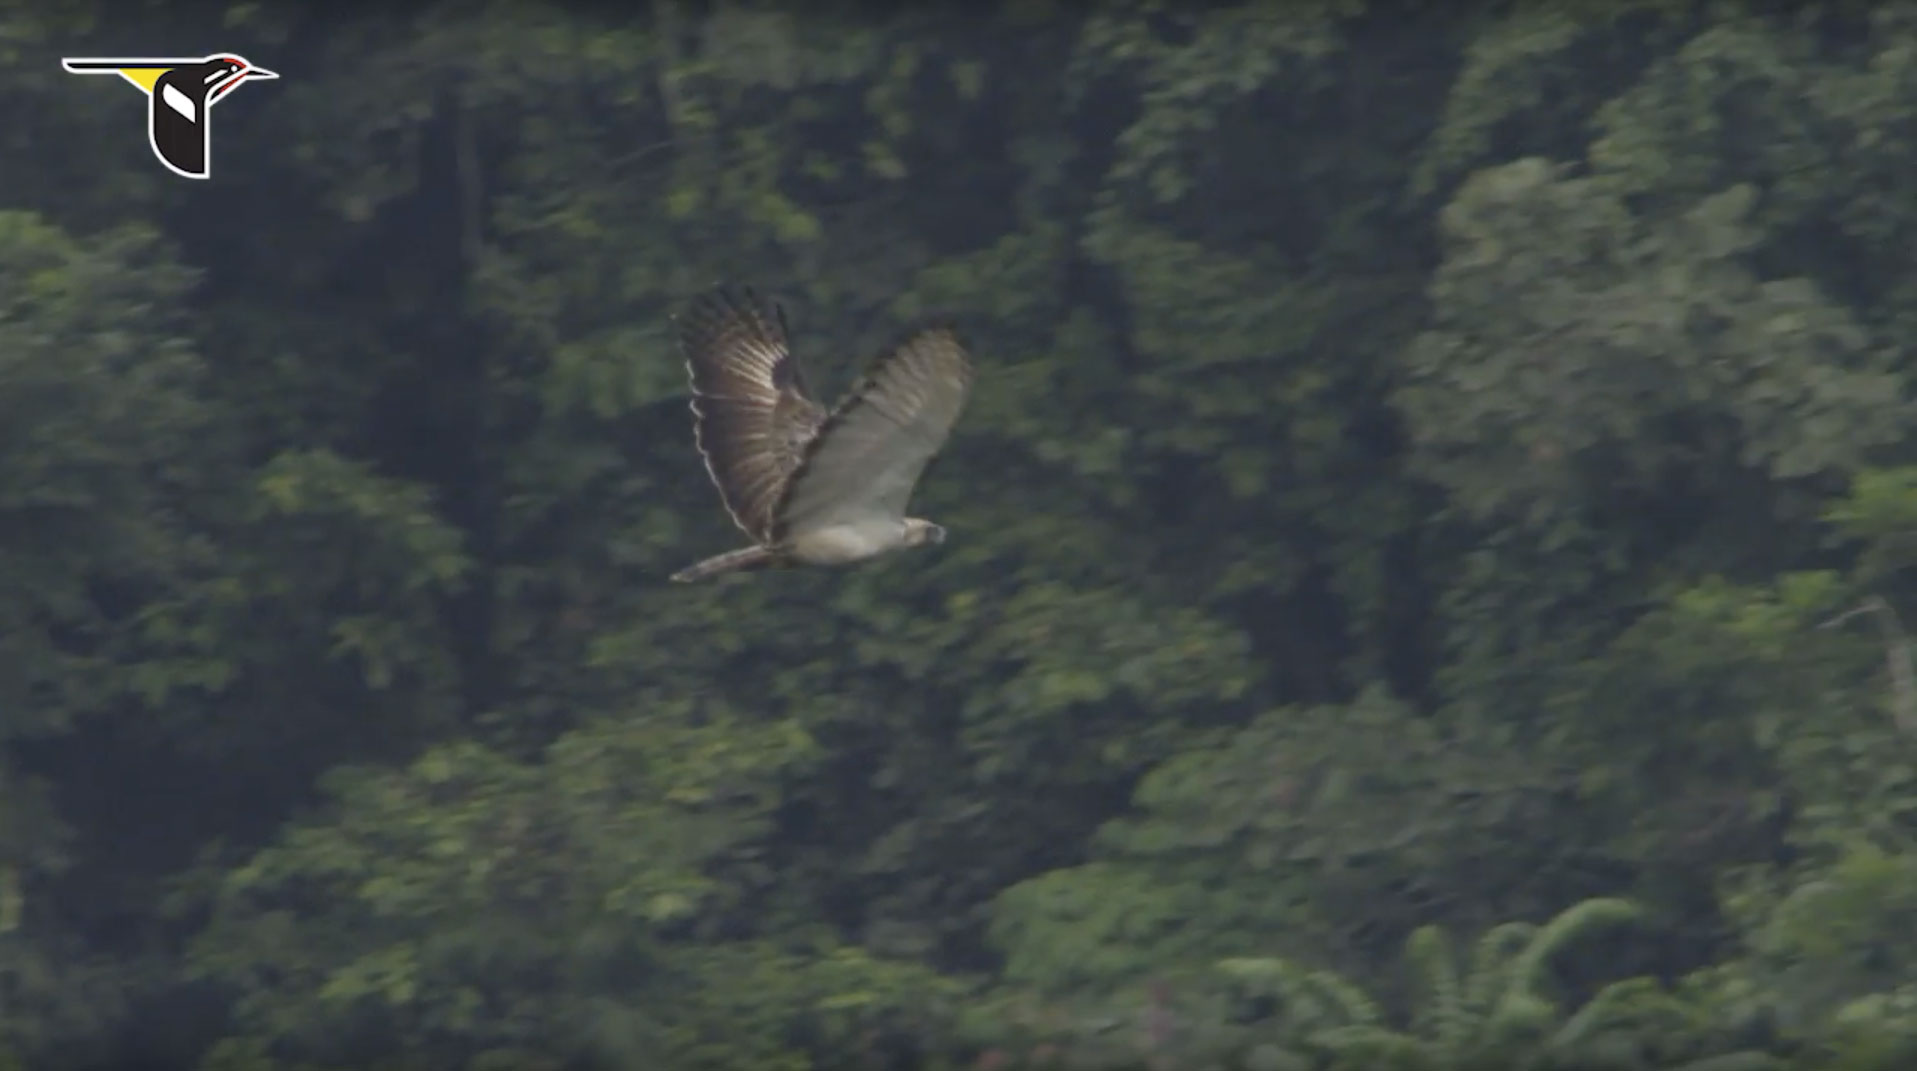 Philippine Eagle in flight